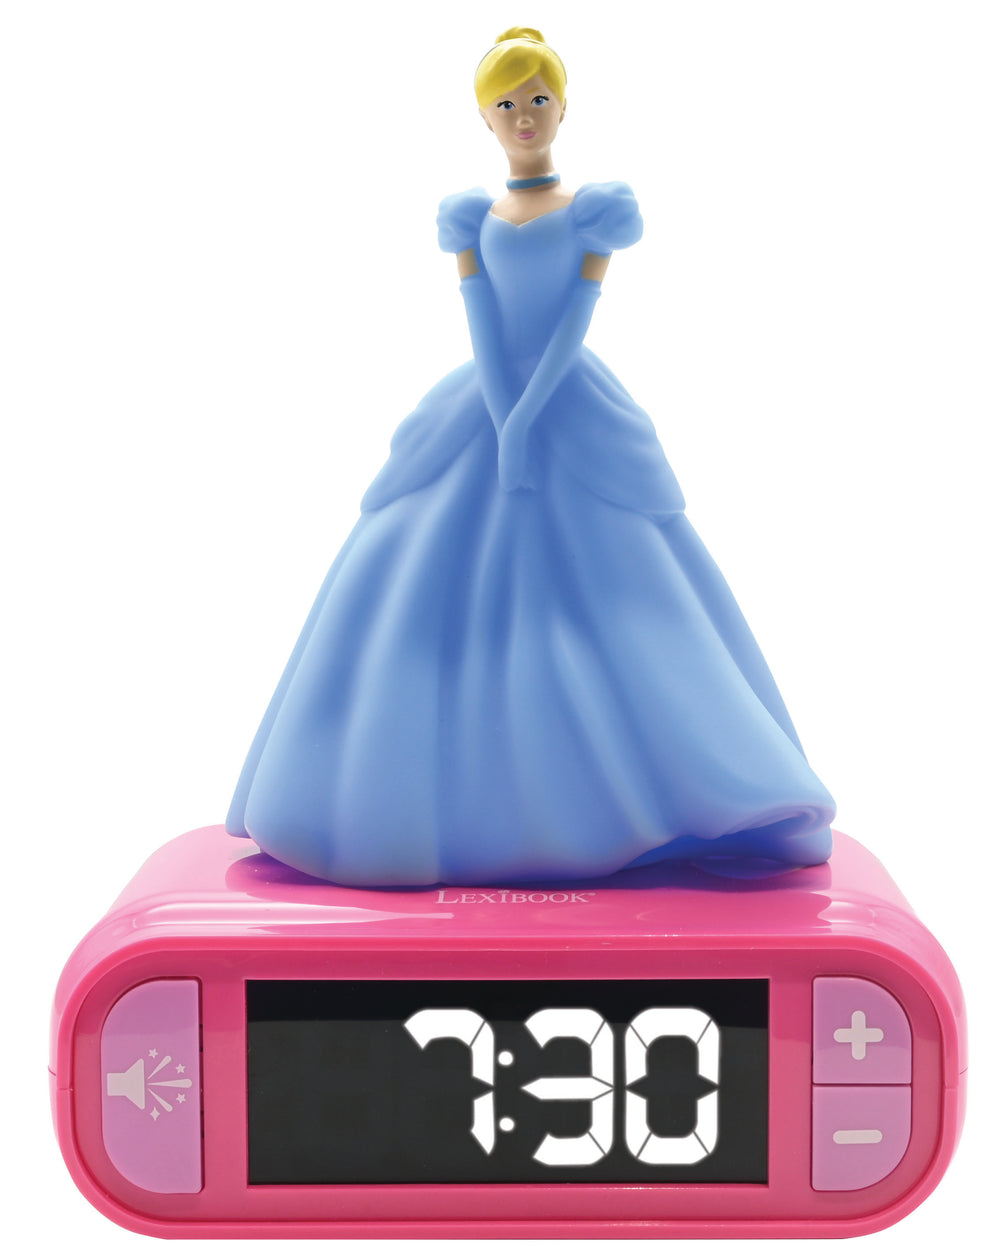 Disney Princess Enchanted Digital Alarm Clock with Nightlight